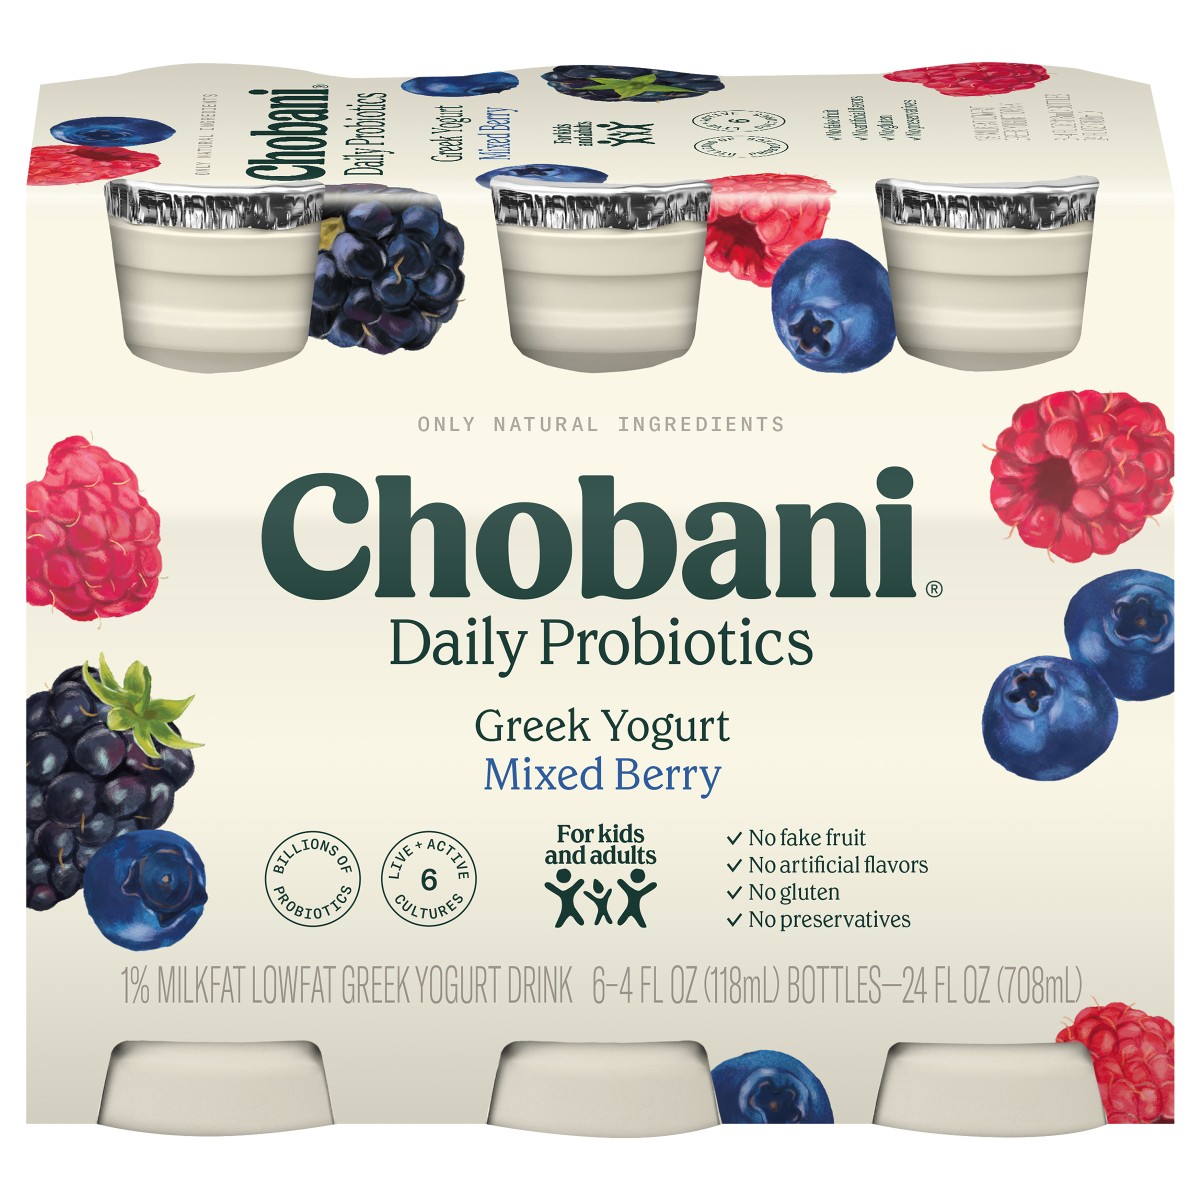 Chobani daily probiotics.jpg